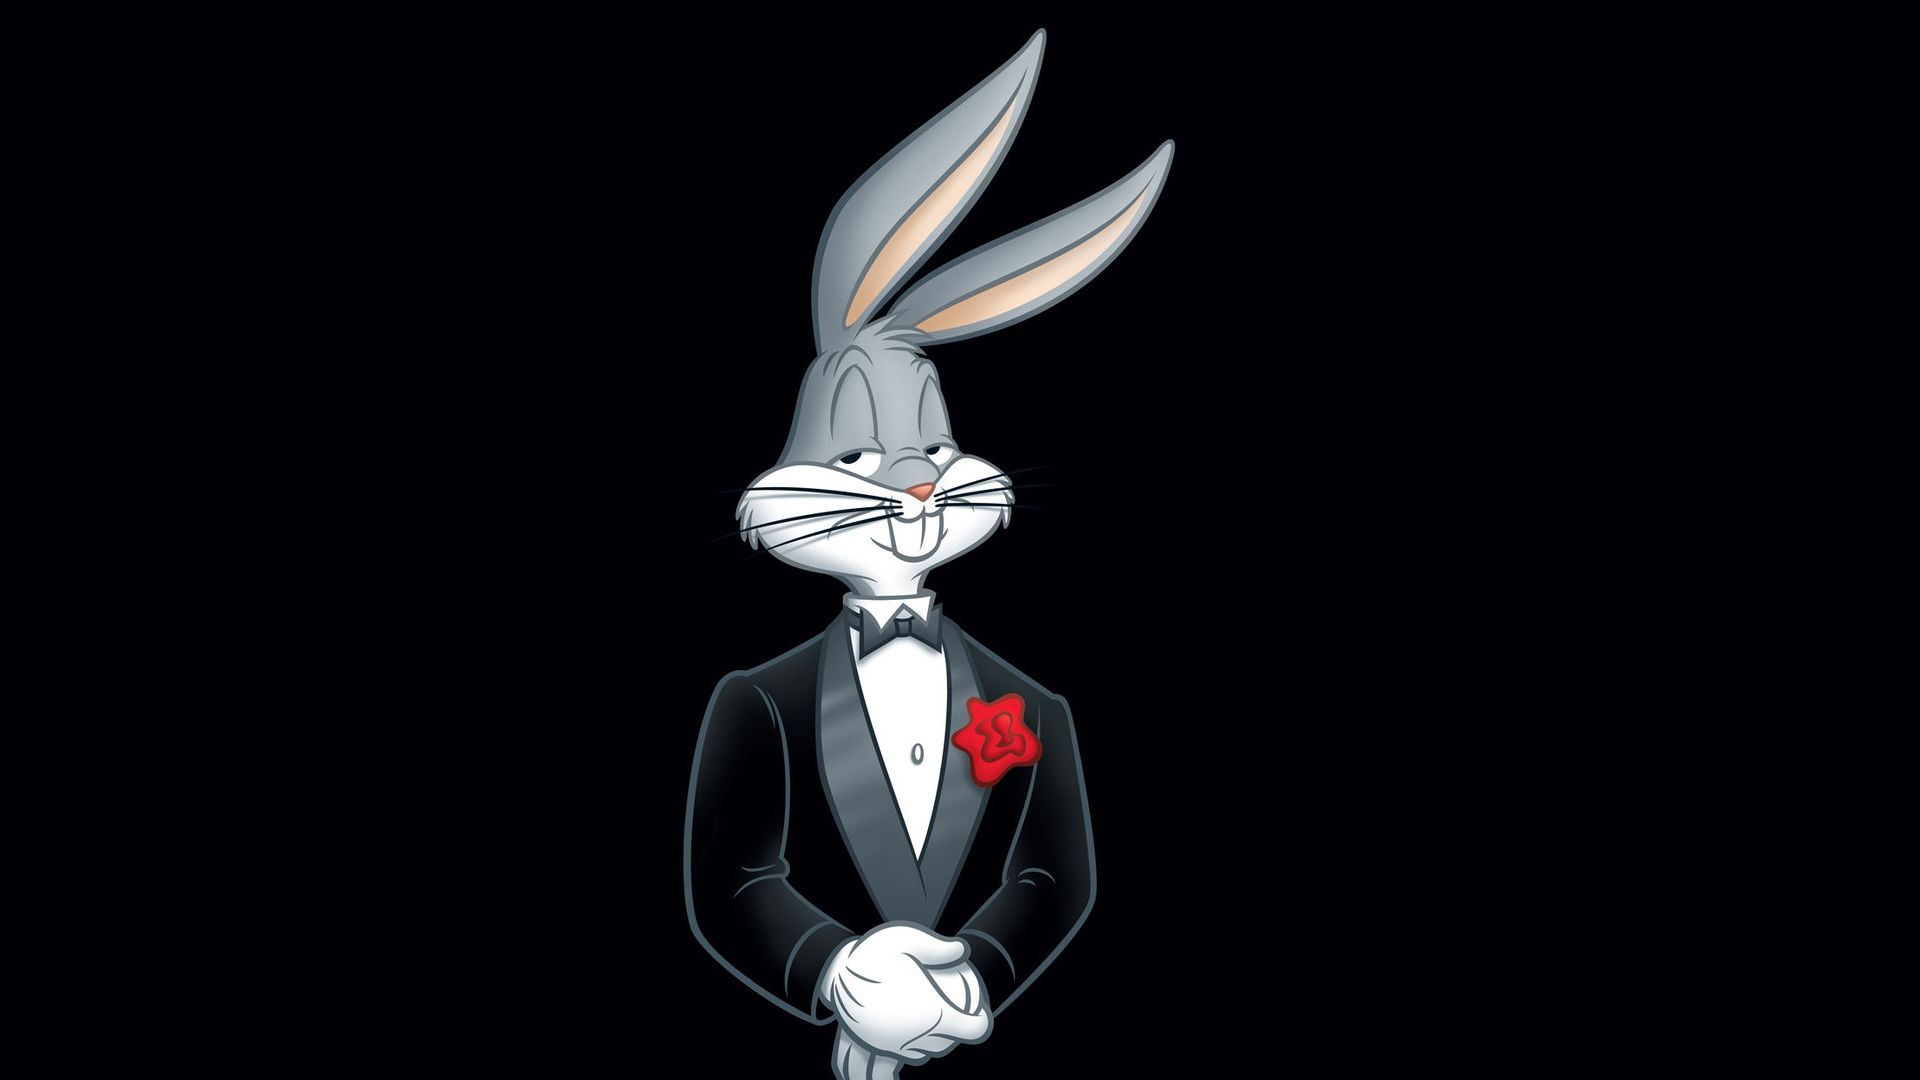 Download 1920x1080 HD Wallpaper bugs bunny cartoon smoking bow tie